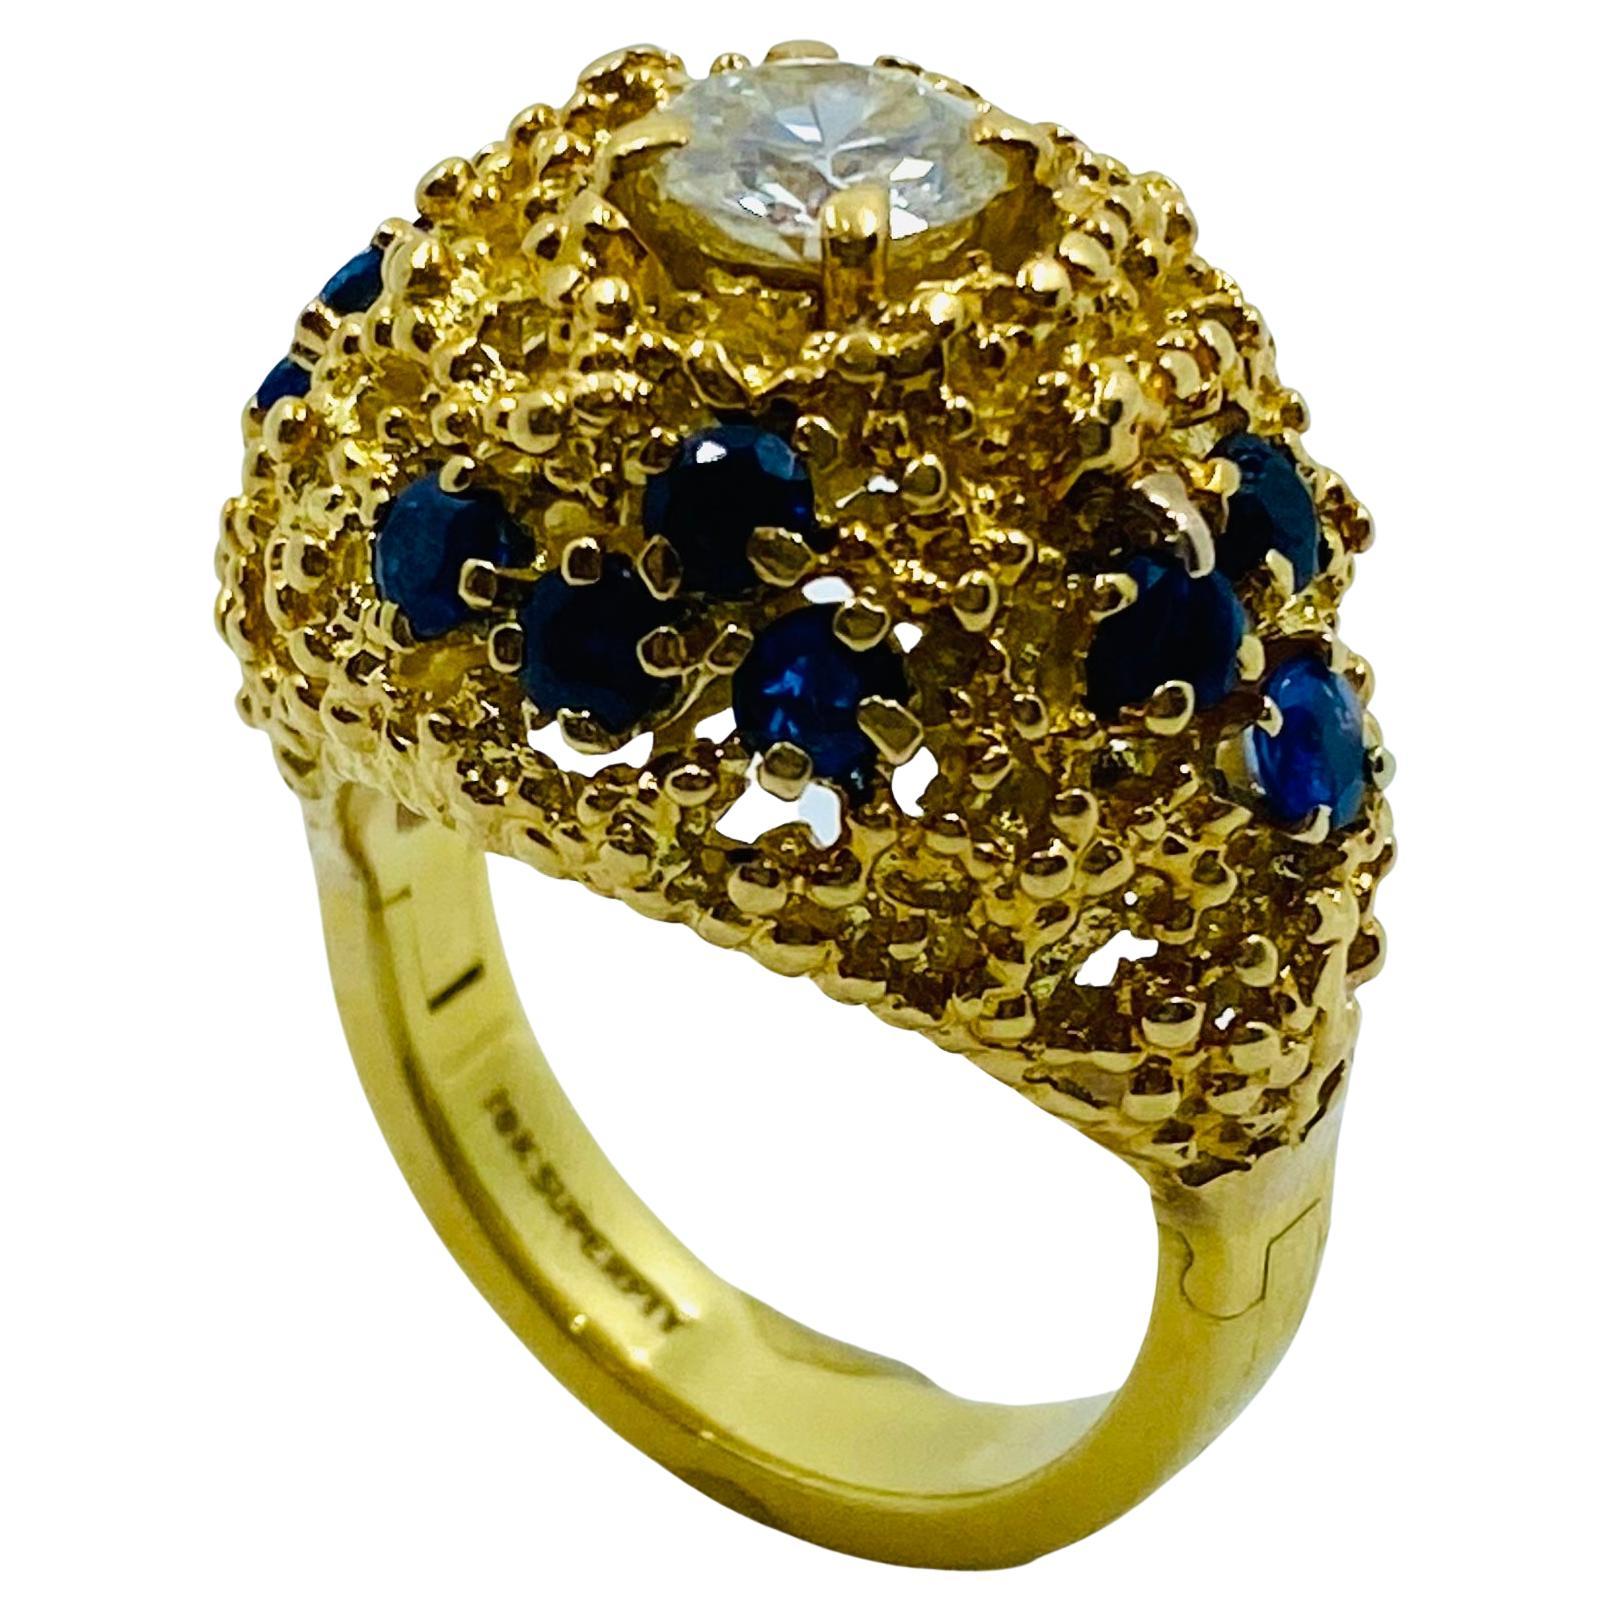 DESIGNER: Tiffany & Co.
CIRCA: 1970’s
MATERIALS: 18k Yellow Gold
GEMSTONE: 0.9 cts.  Round Cut Diamond
GEMSTONE: Sapphire 
WEIGHT: 15.5 grams
MEASUREMENTS: 1 1/4